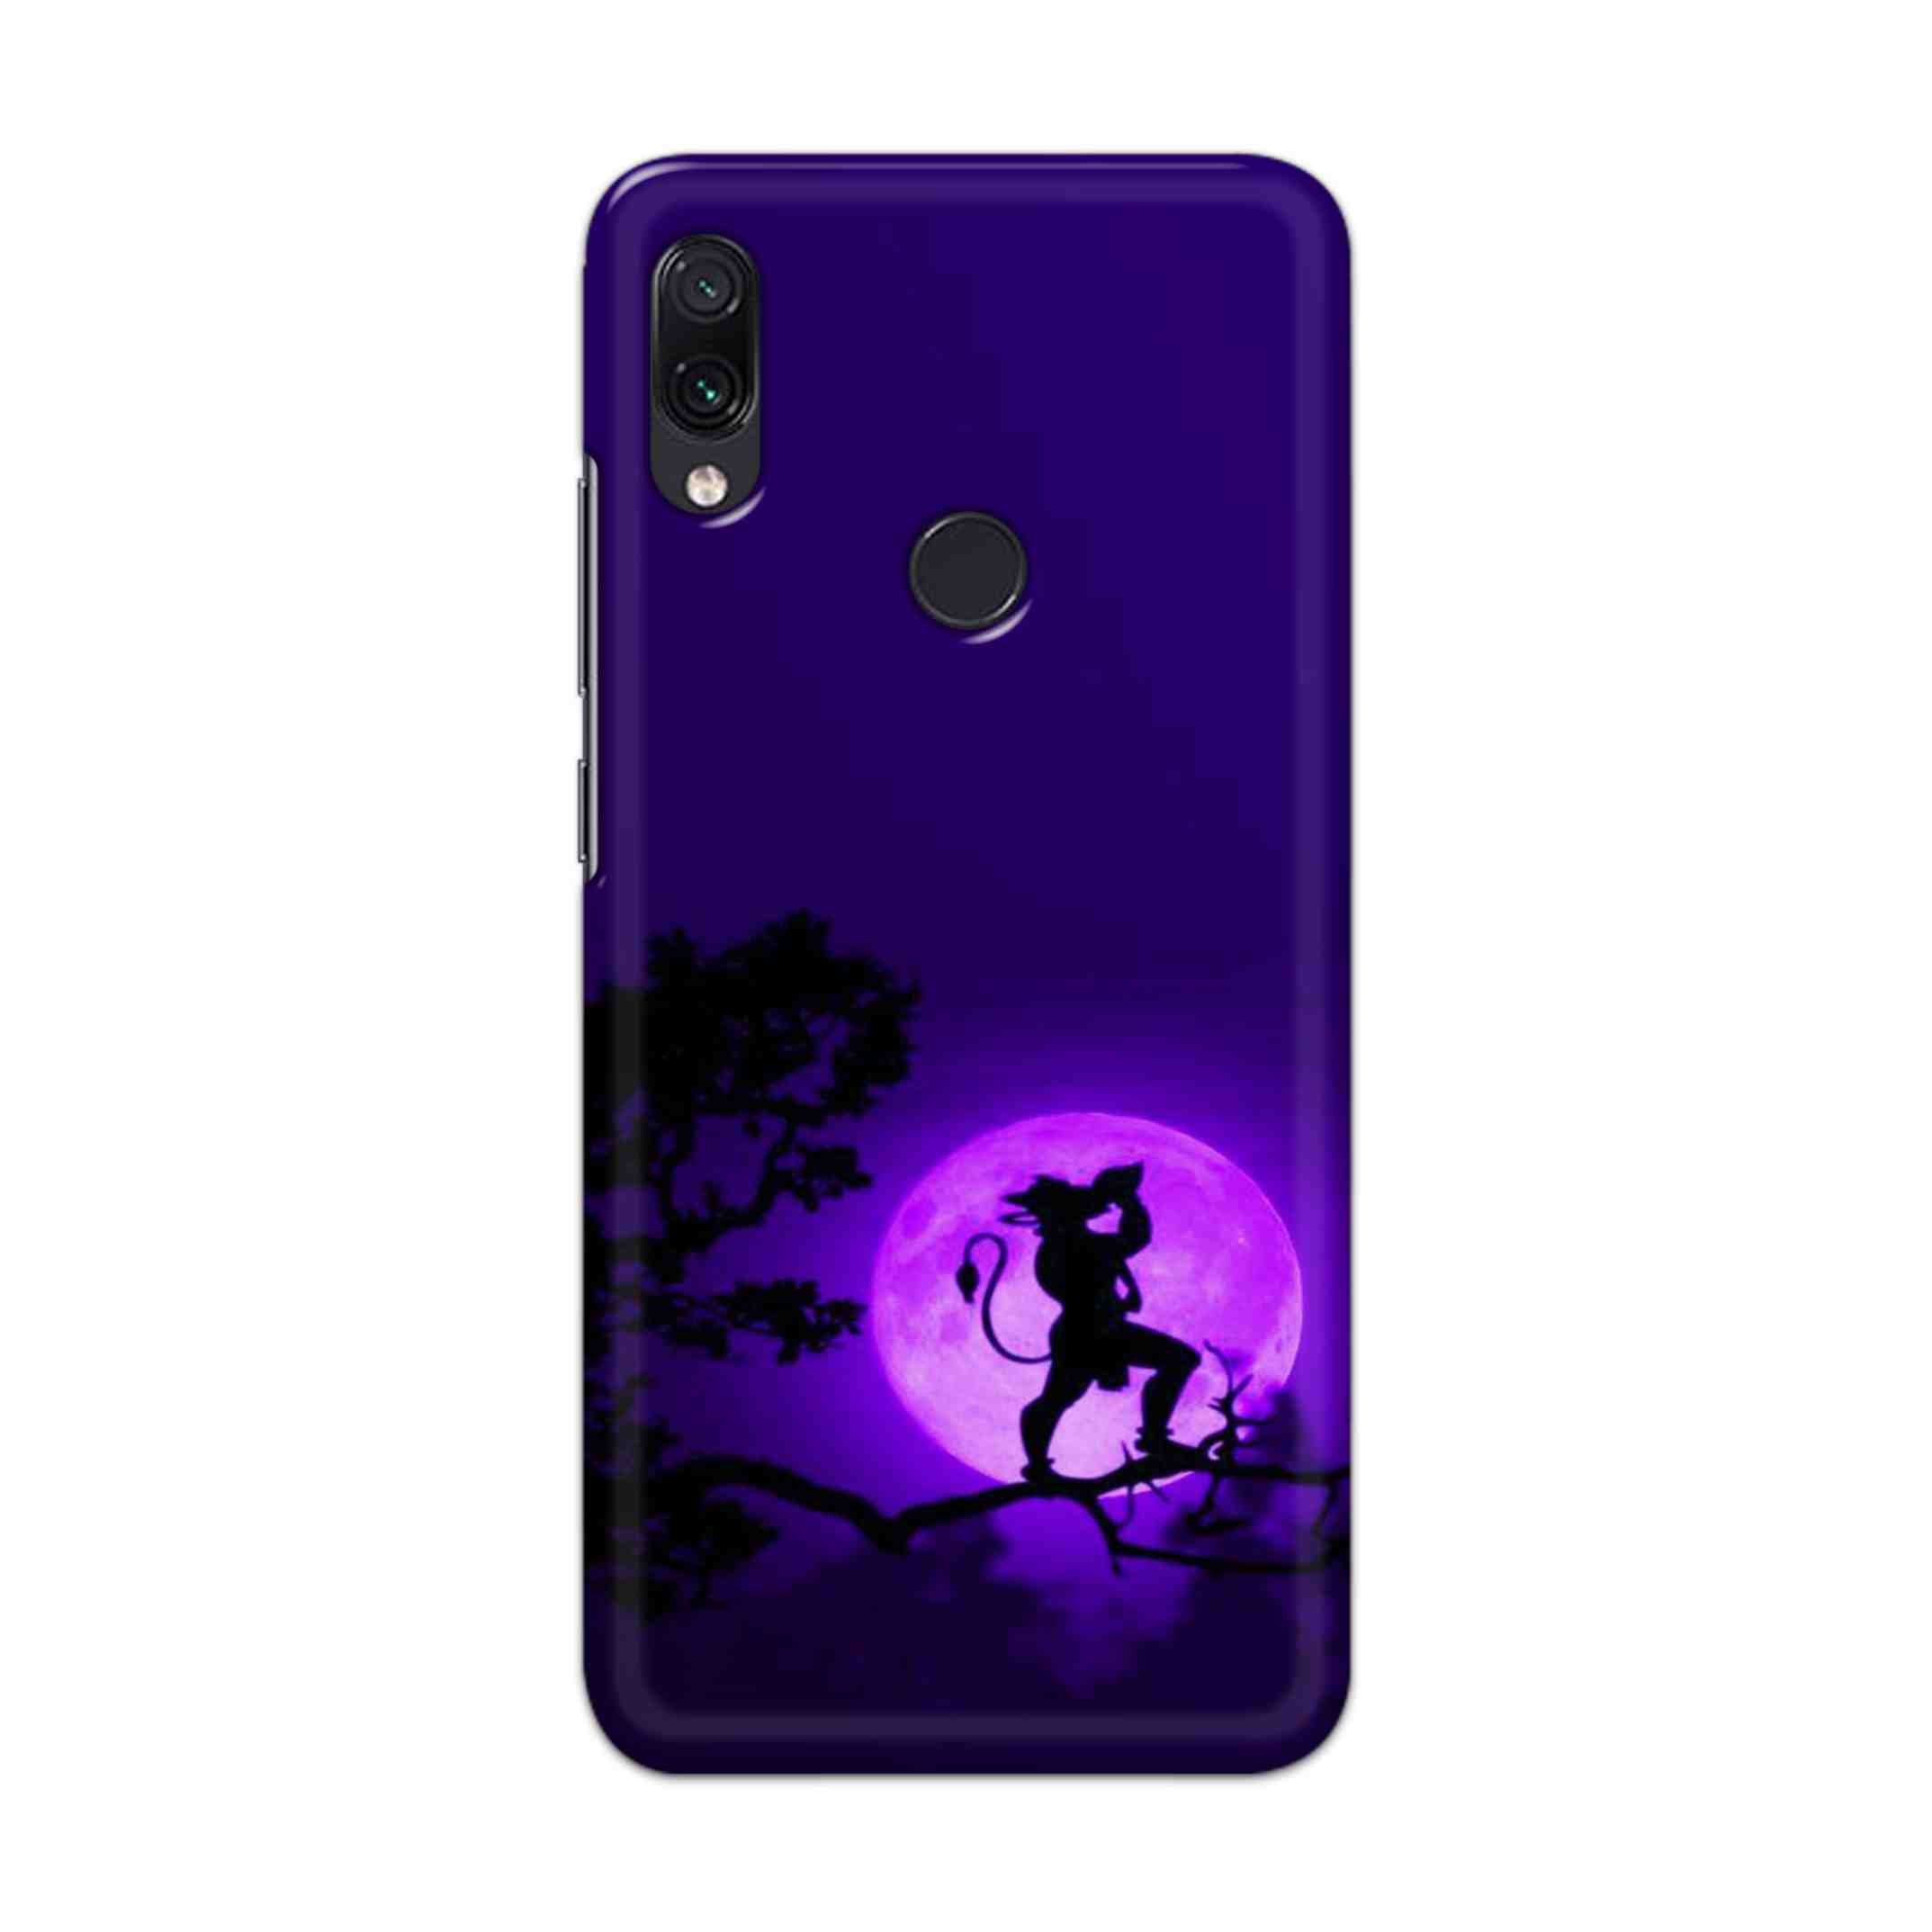 Buy Hanuman Hard Back Mobile Phone Case Cover For Xiaomi Redmi 7 Online